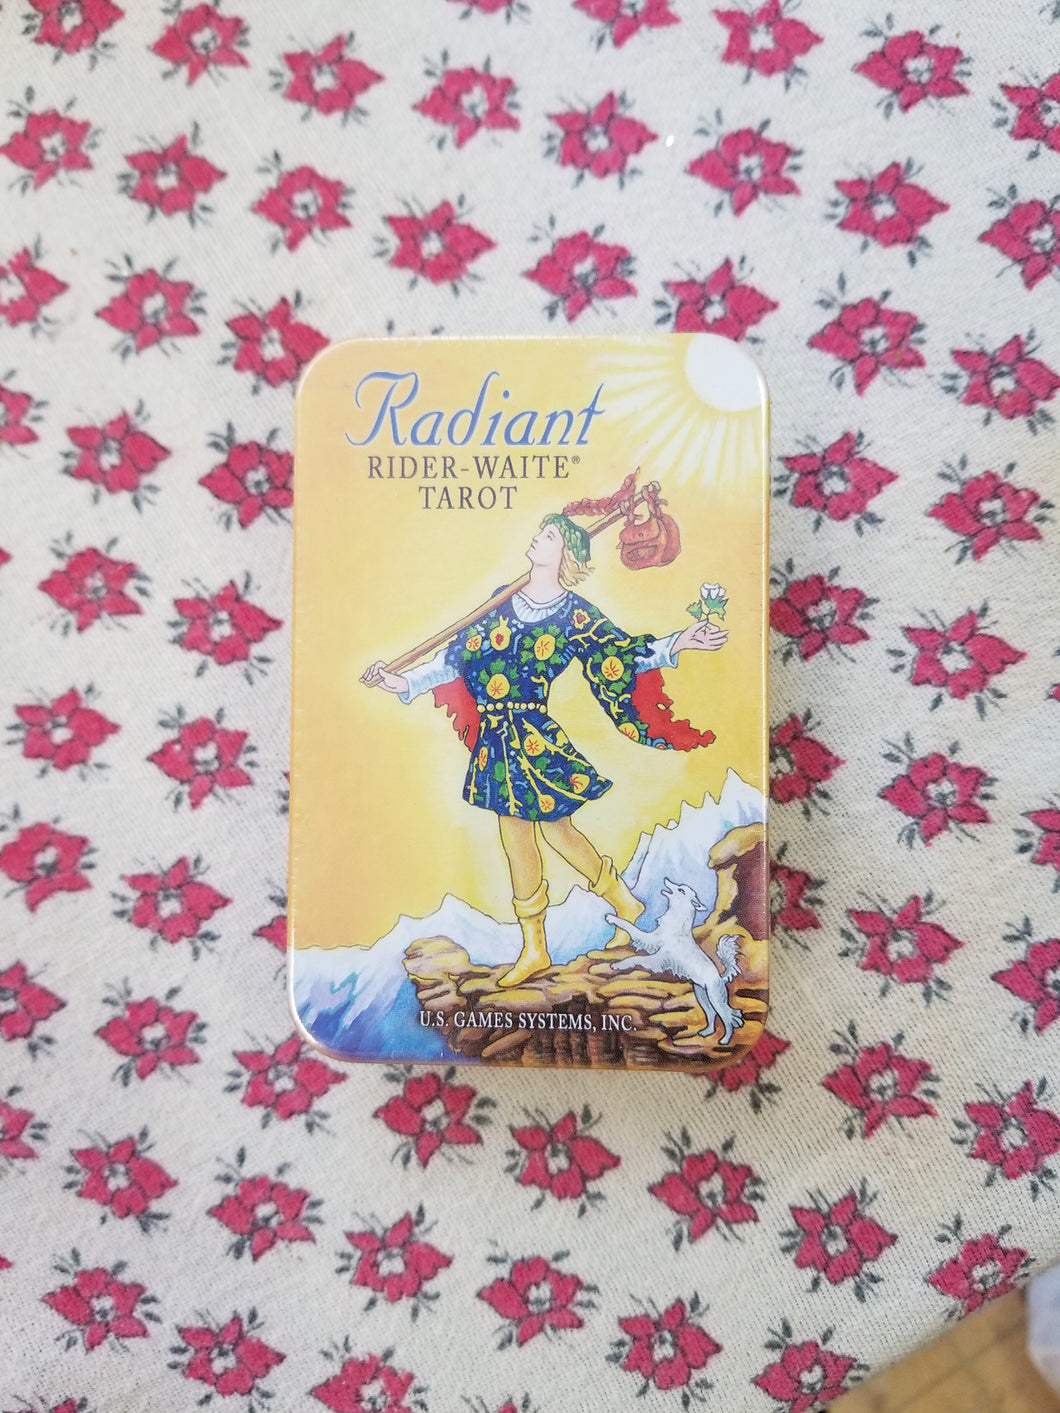 Radiant Rider-Waite Tarot in a Tin